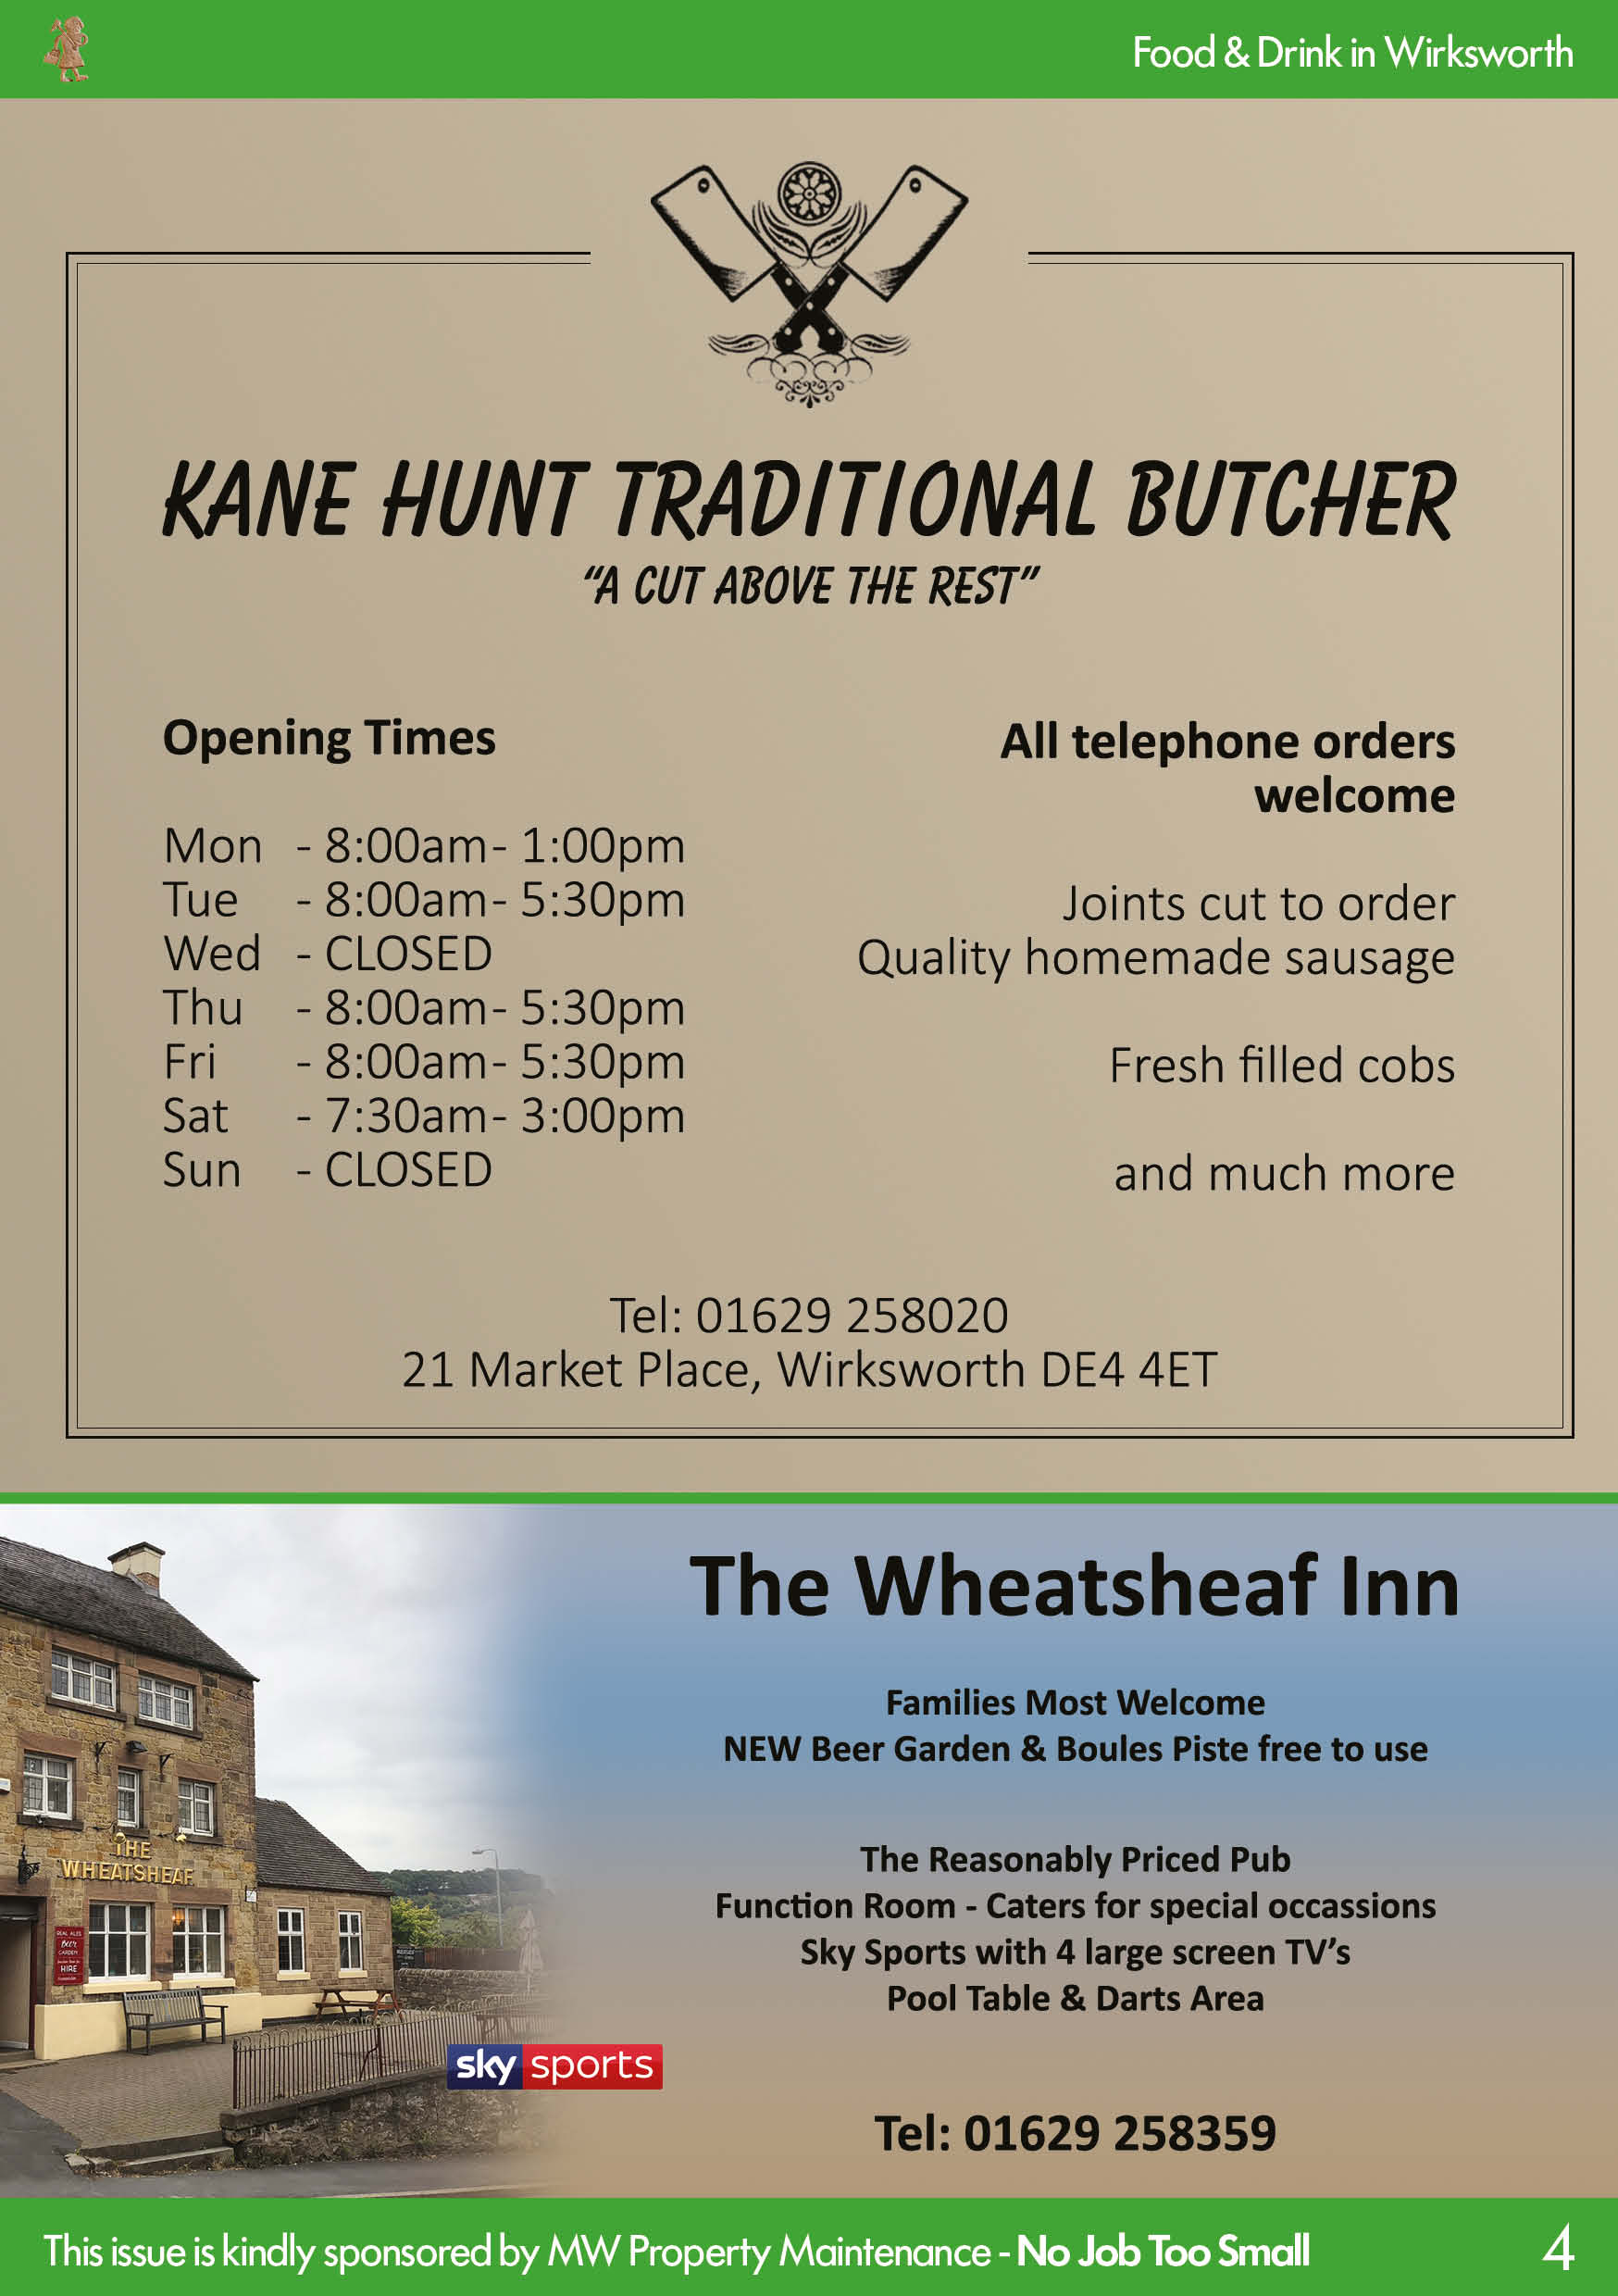 Kane Hunt Traditional Butcher